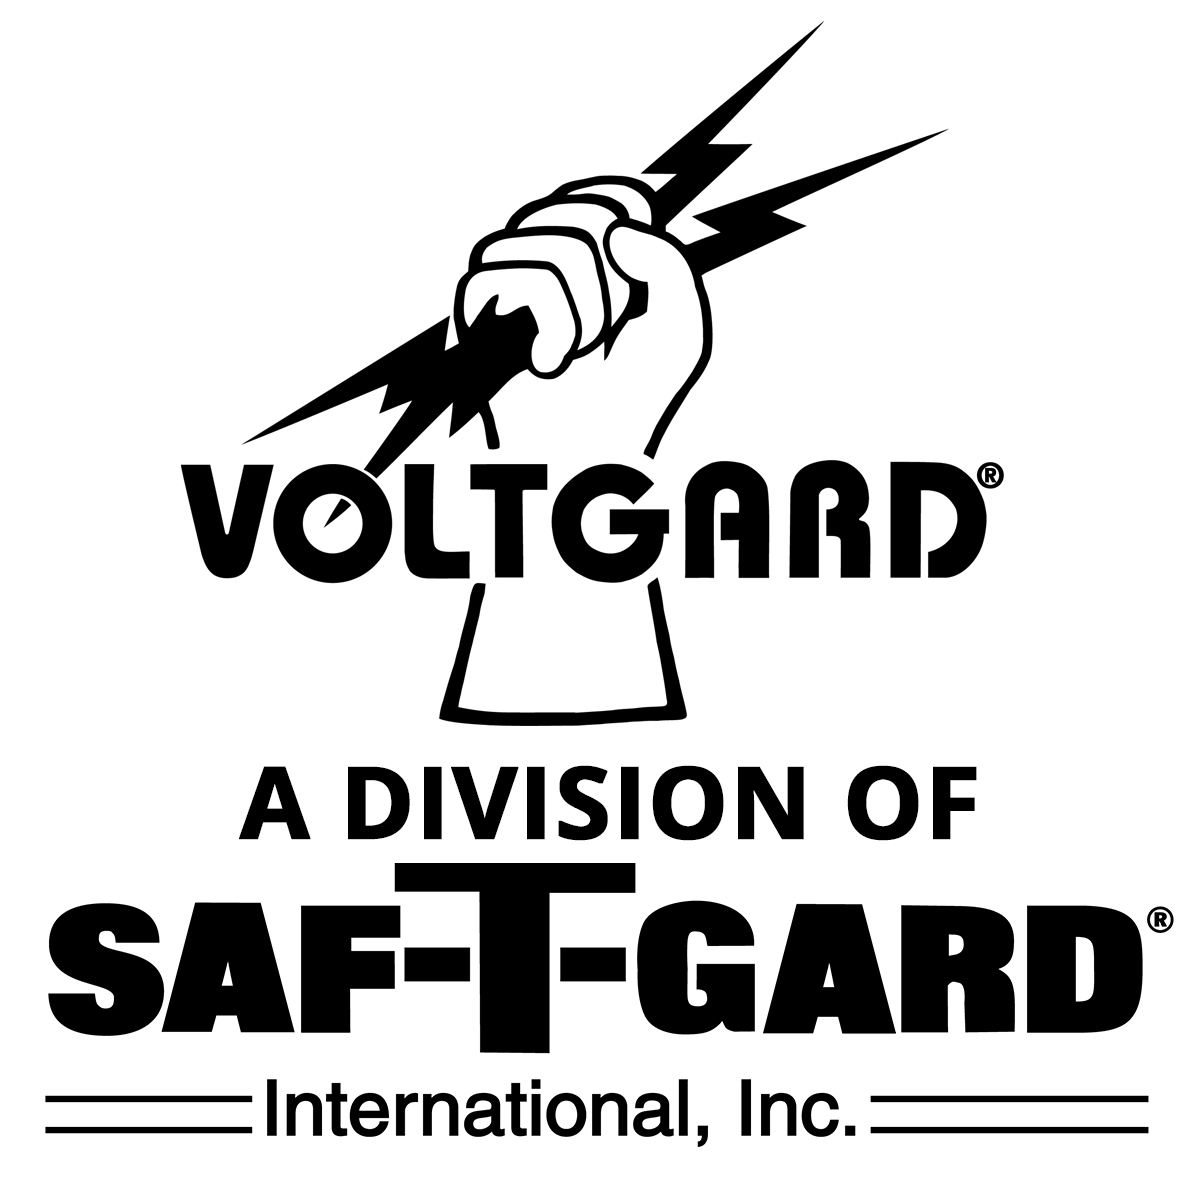 Voltguard, A Division of Saf-T-Gard International, Inc.